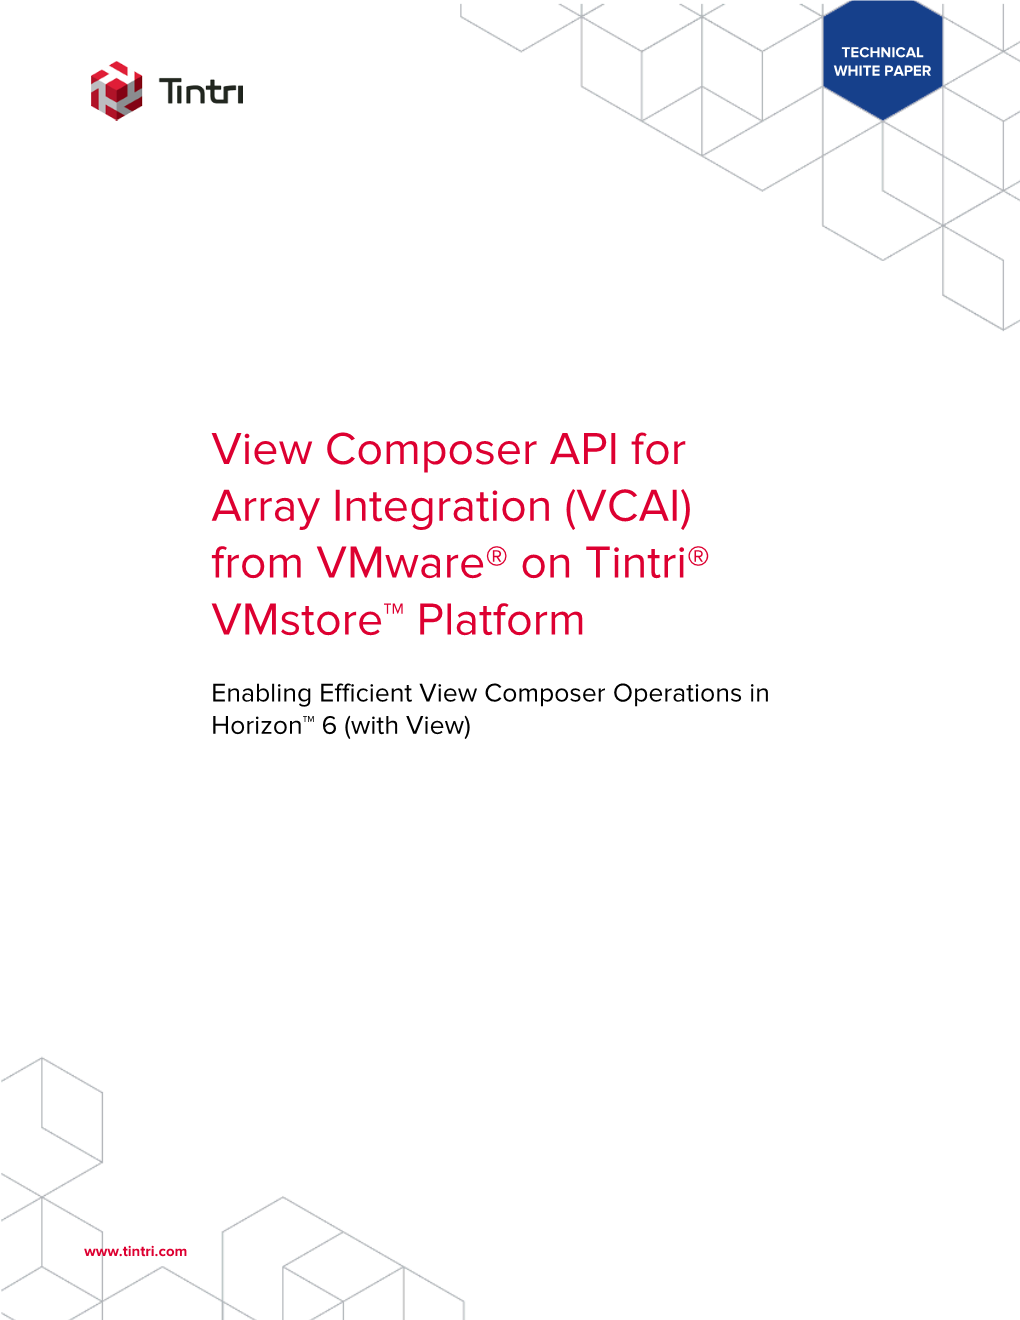 View Composer API for Array Integration (VCAI) from Vmware® on Tintri® Vmstore™ Platform